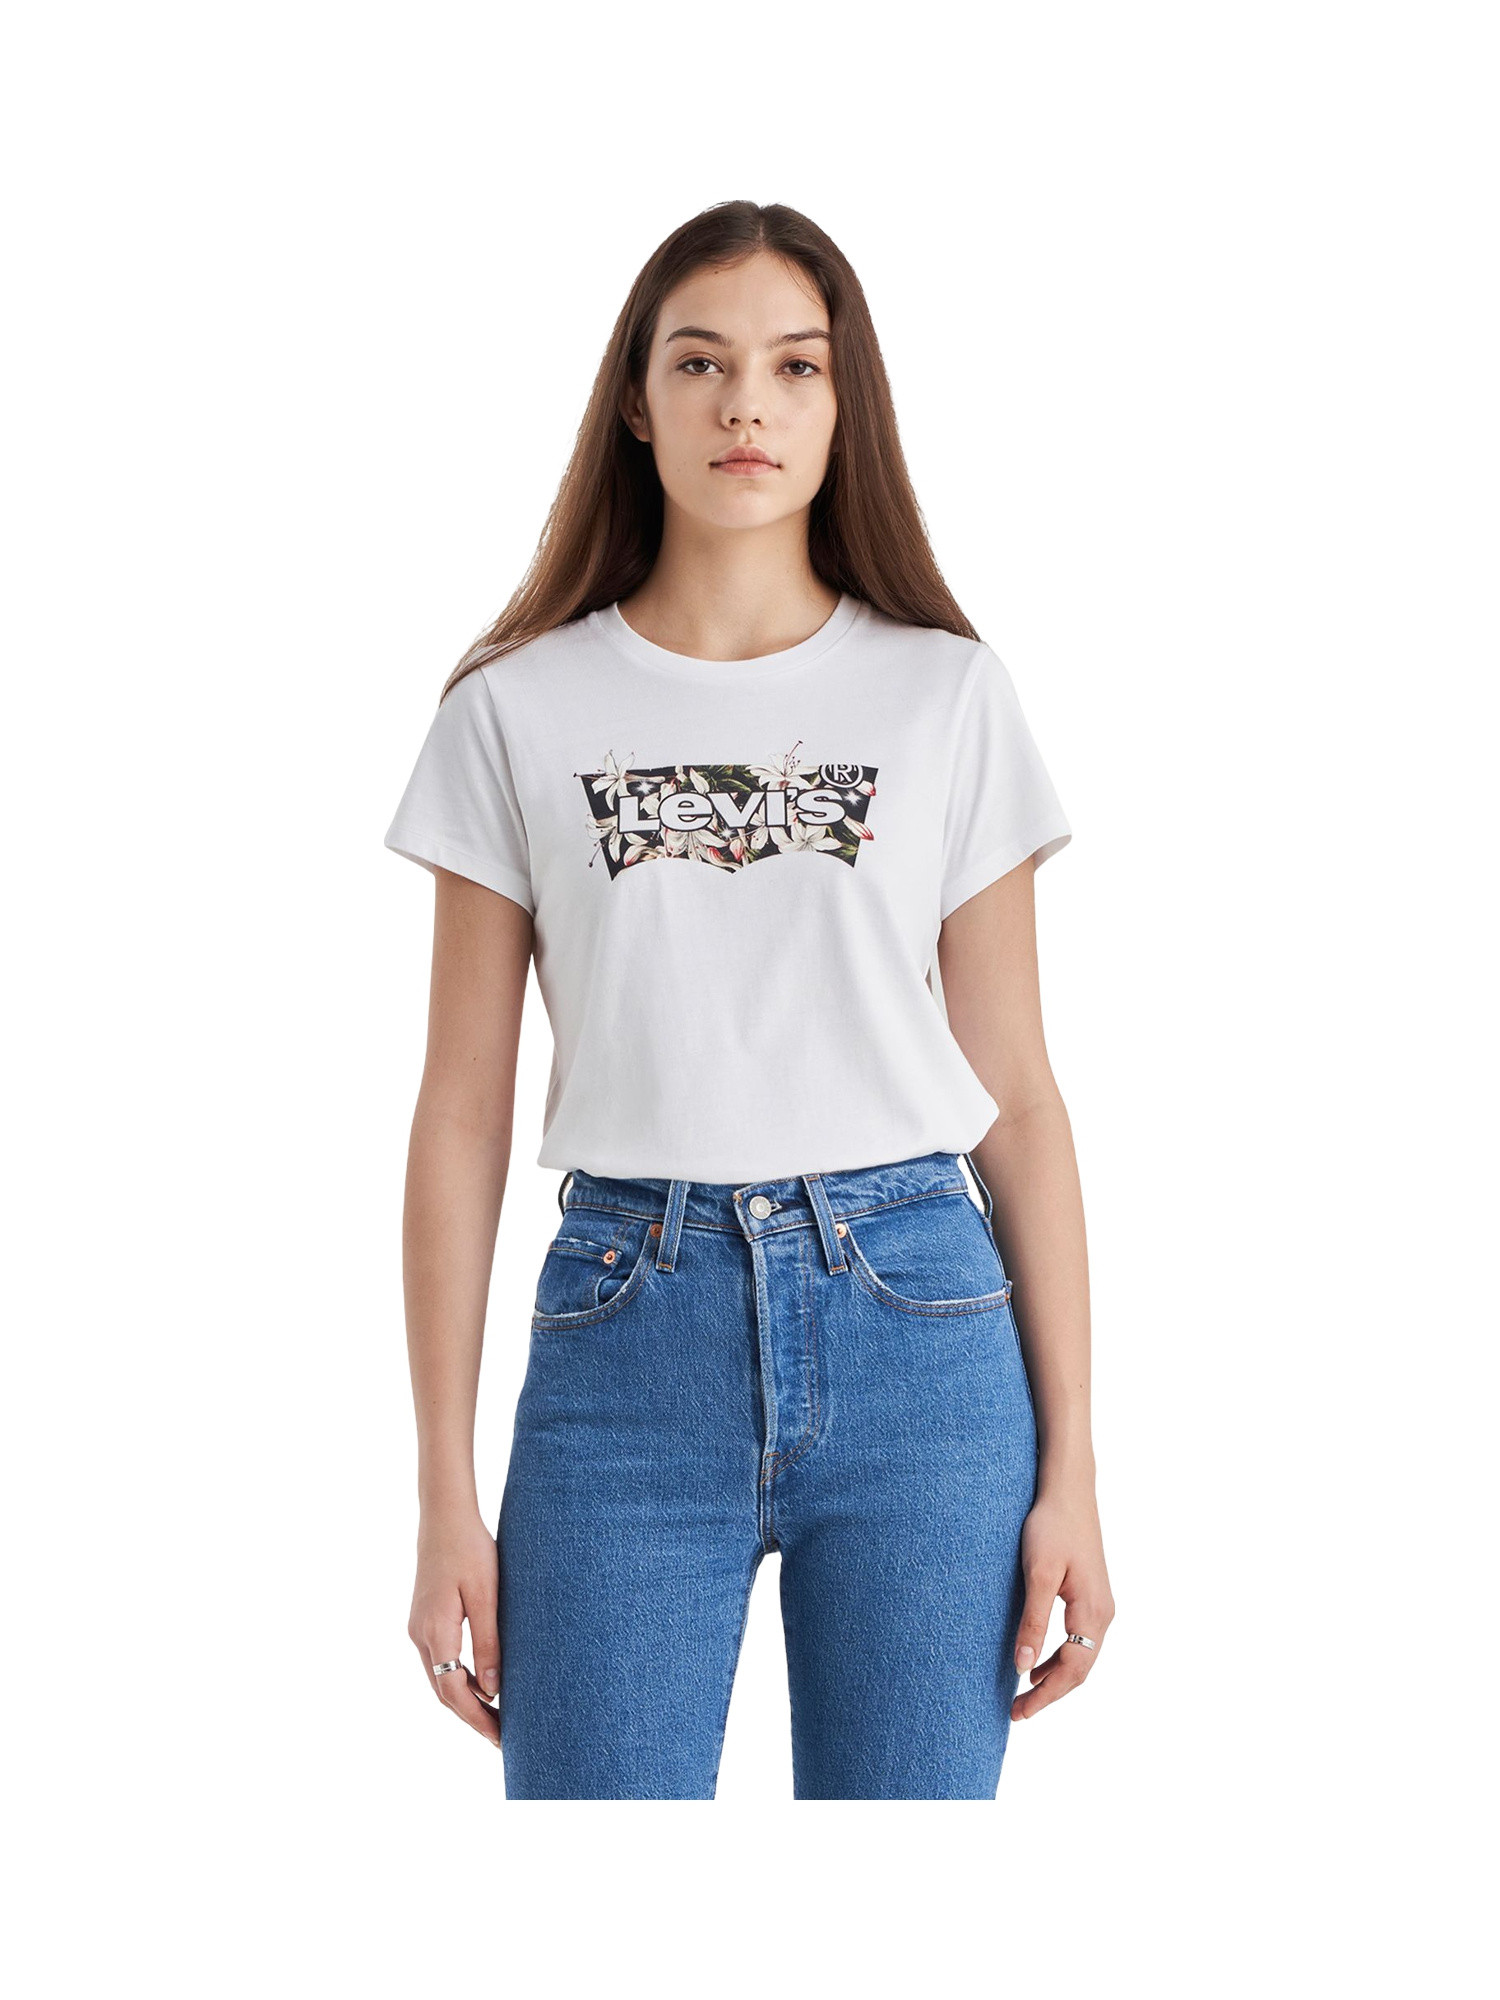 Levi's - T-shirt con logo floreale, Bianco, large image number 2